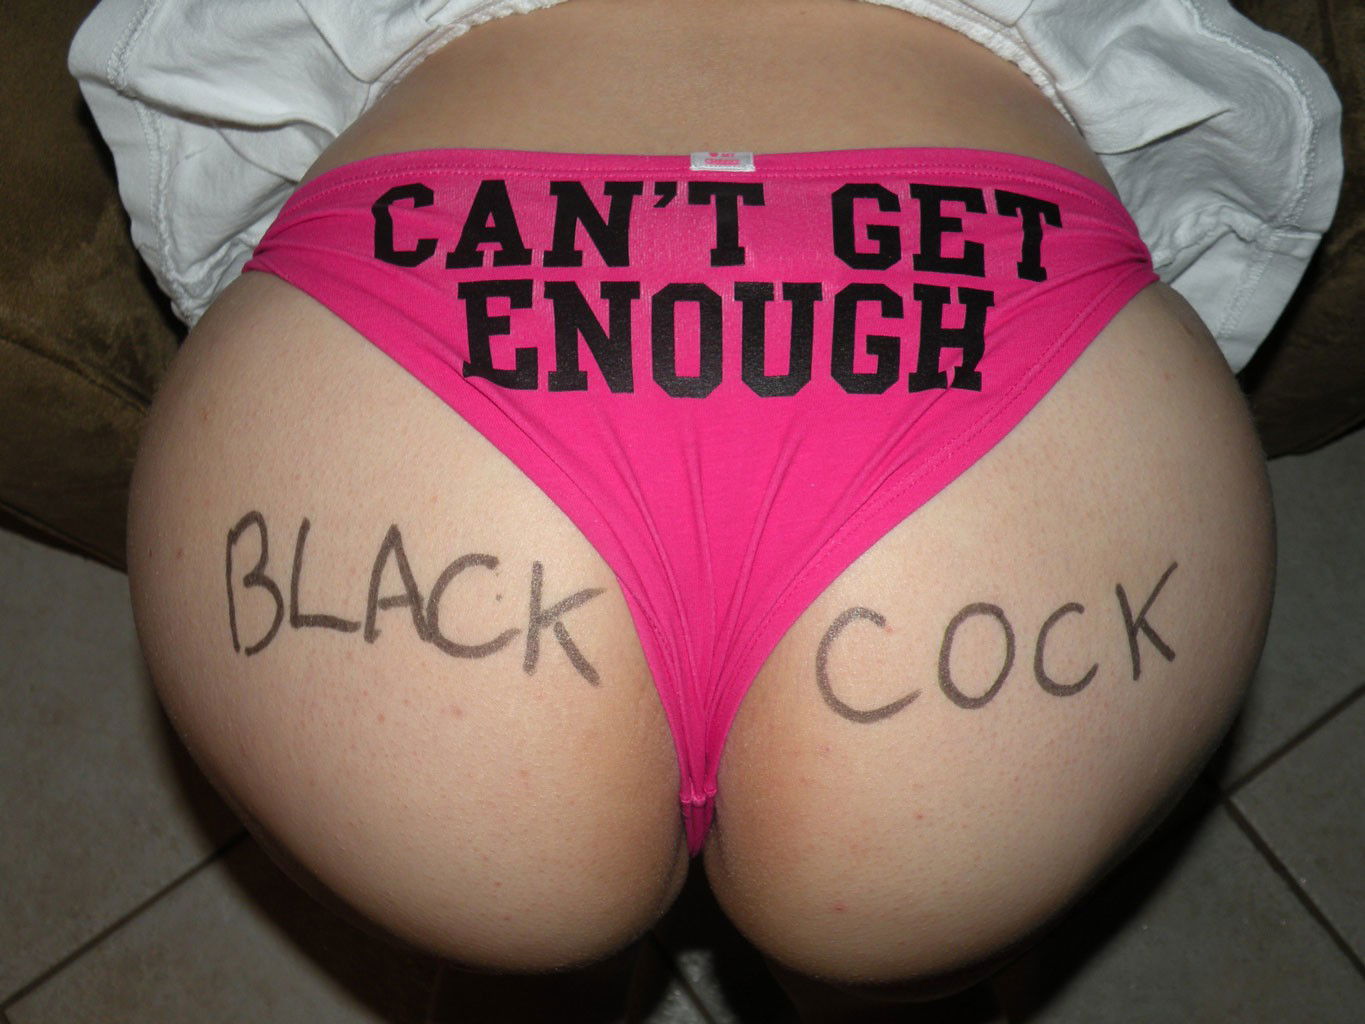 Photo by Slutt with the username @Slutt,  November 22, 2019 at 3:54 AM. The post is about the topic SlutProblem and the text says 'Cant Get Enough Black Cock

#bbc #bbcslut #slut #slutproblem #bbconly #booty'